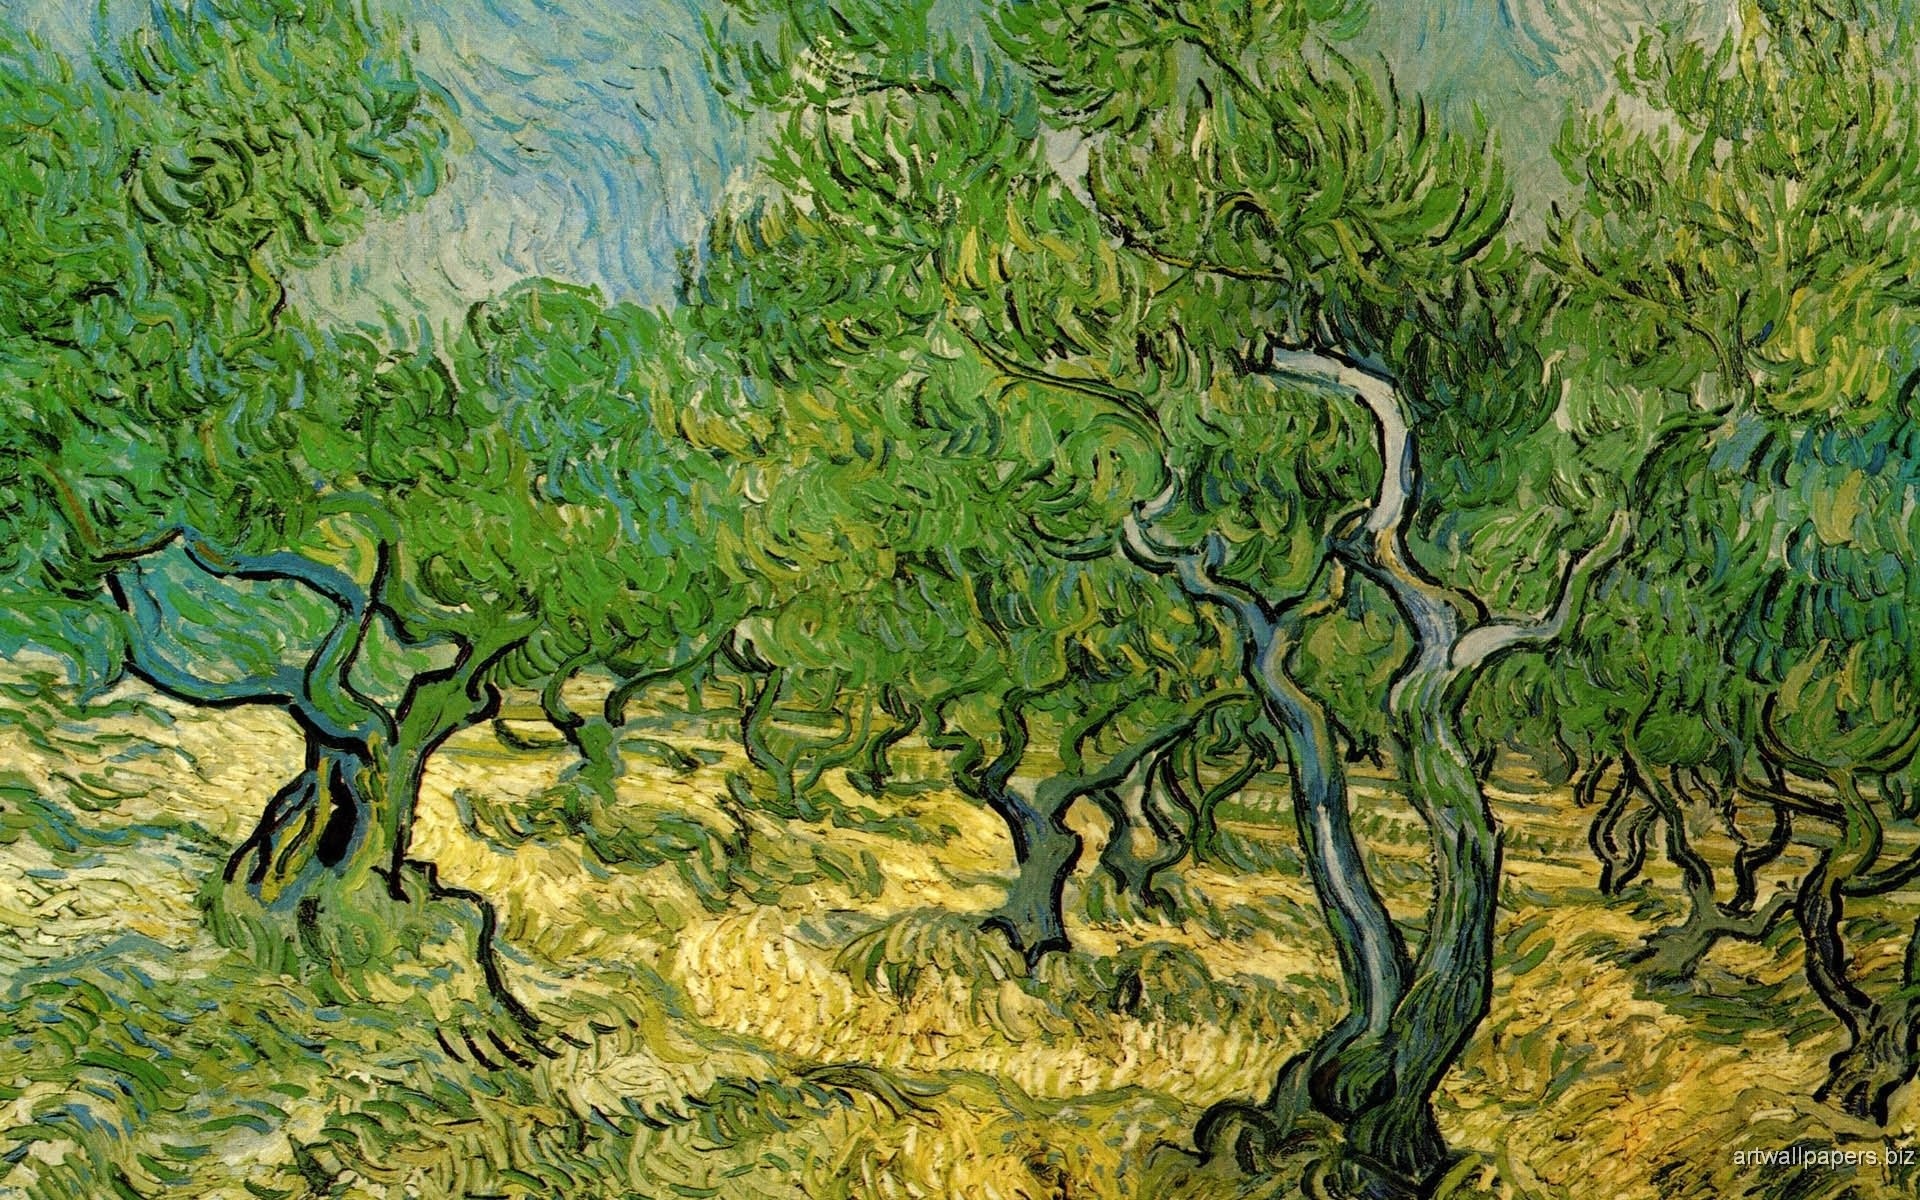 Van Gogh Sailboat Wallpapers